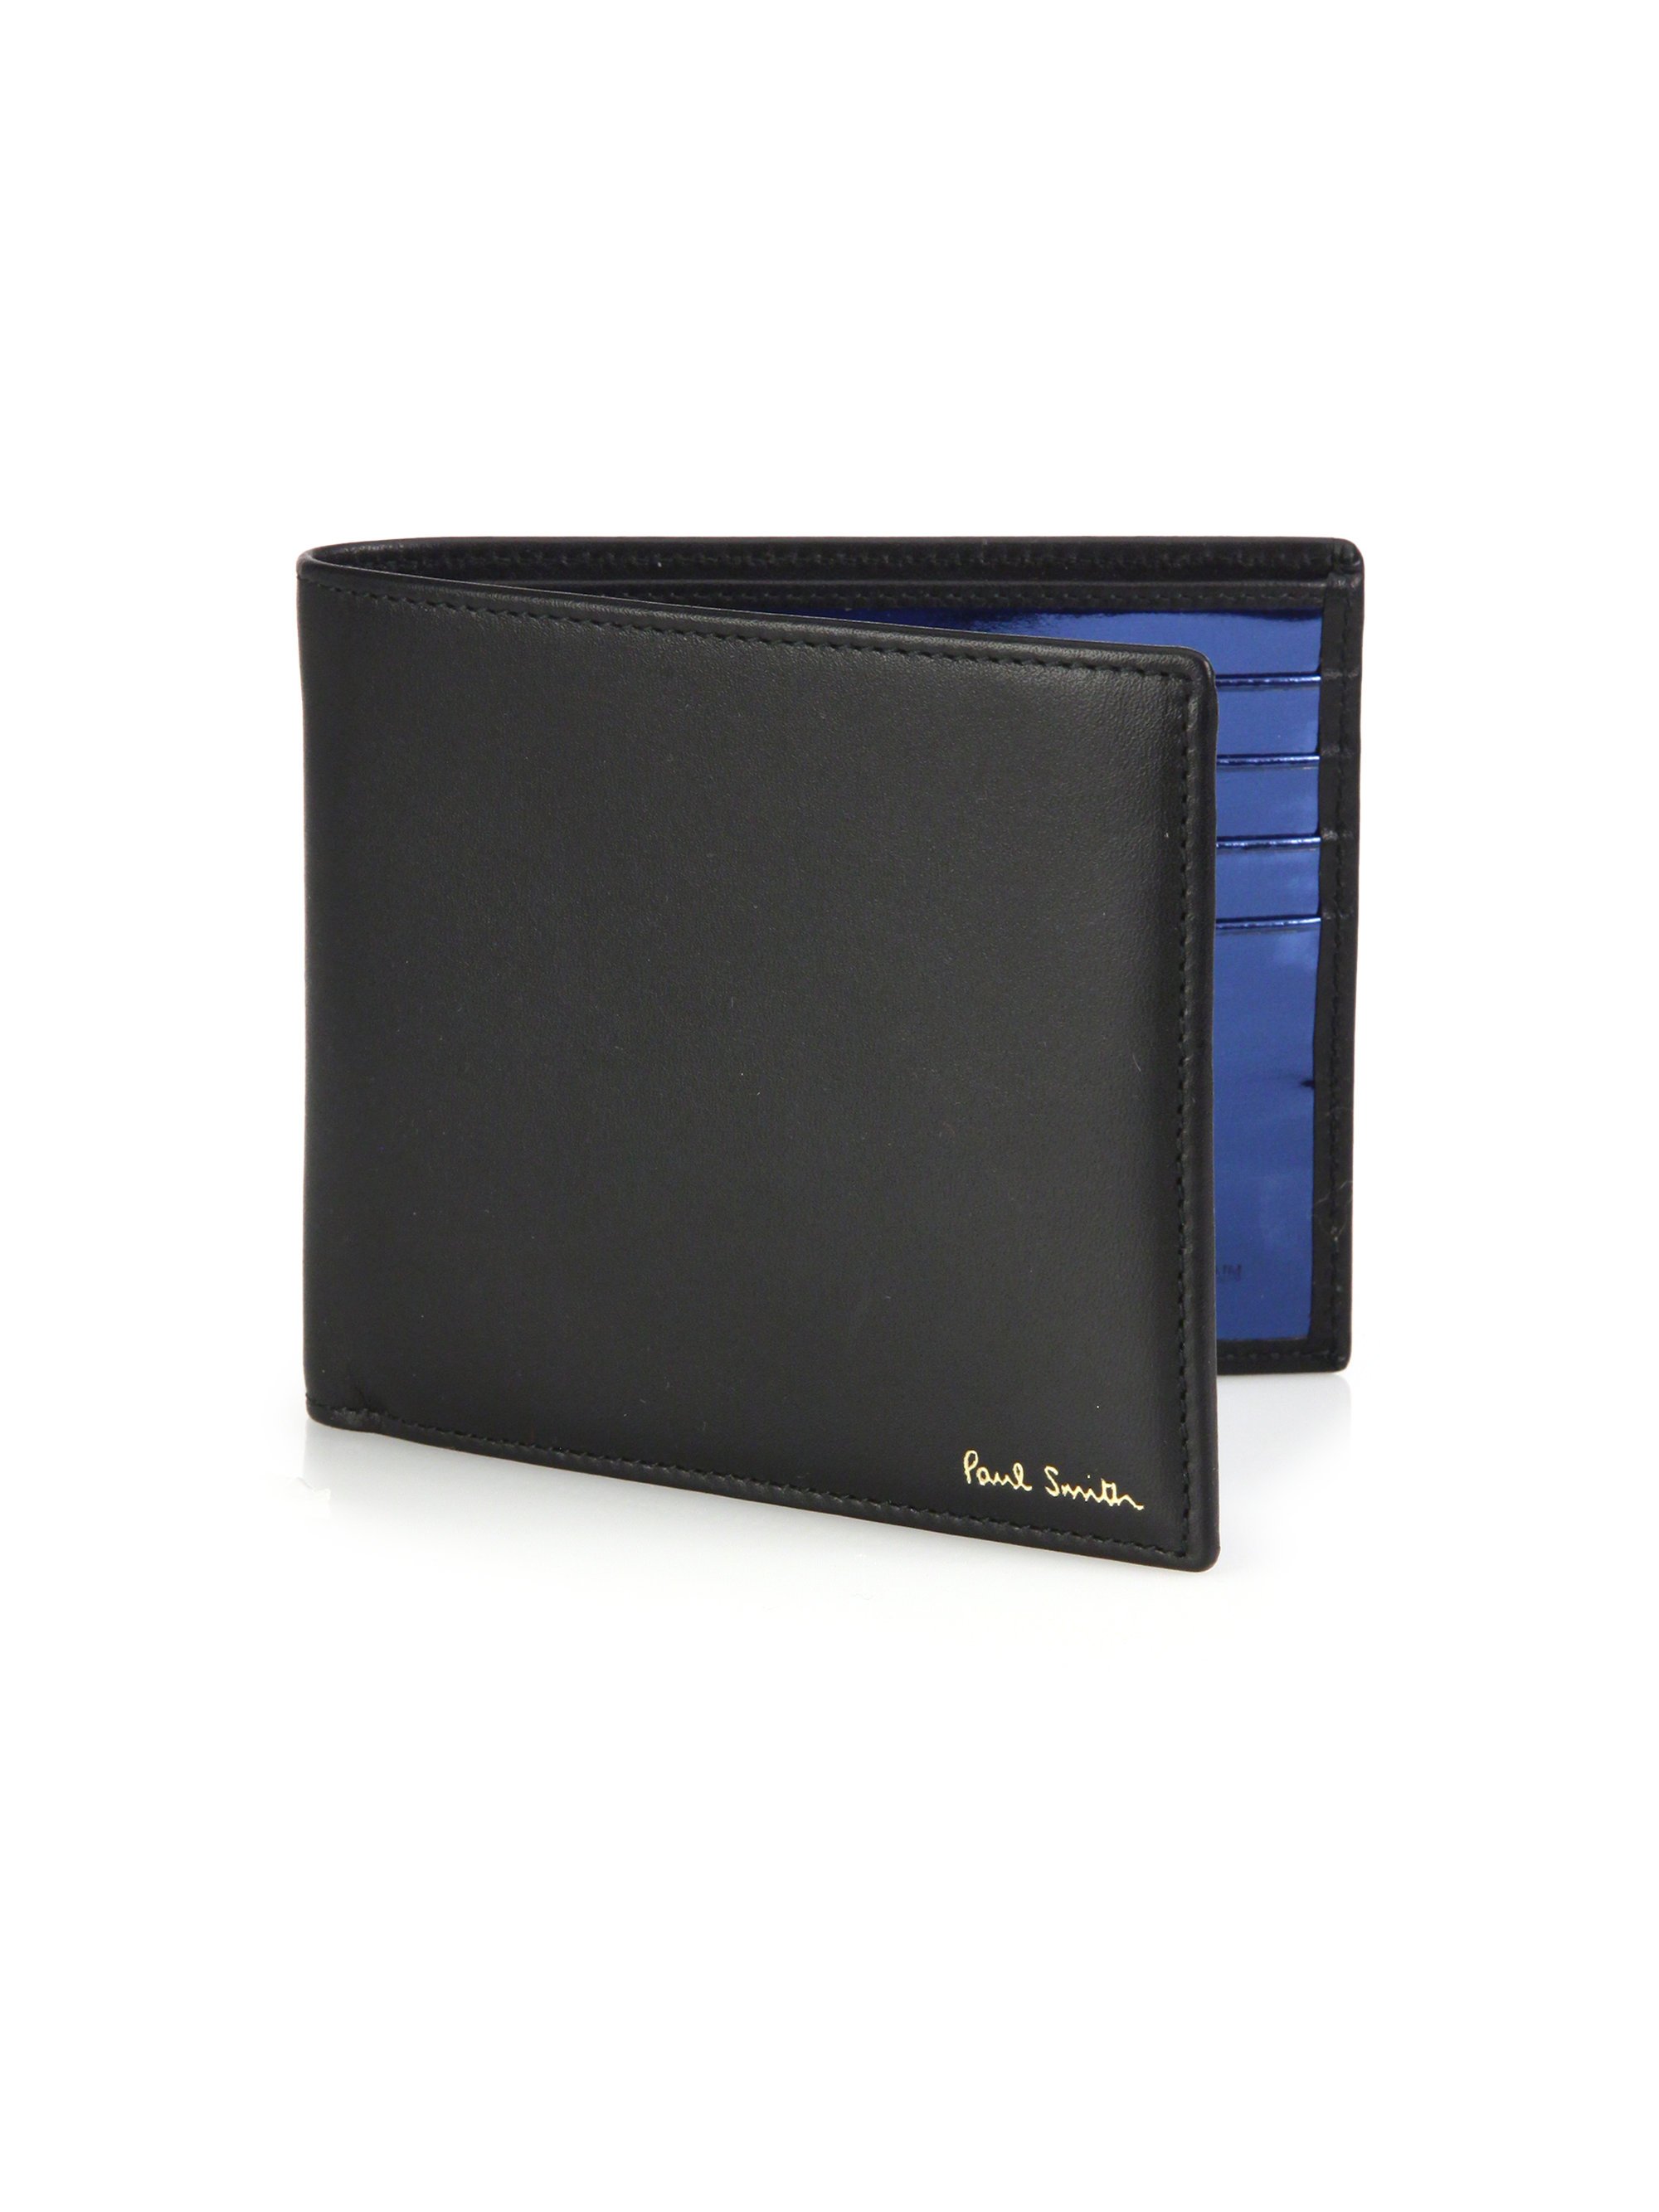 Paul smith Calfskin Leather Bifold Wallet in Black for Men ...